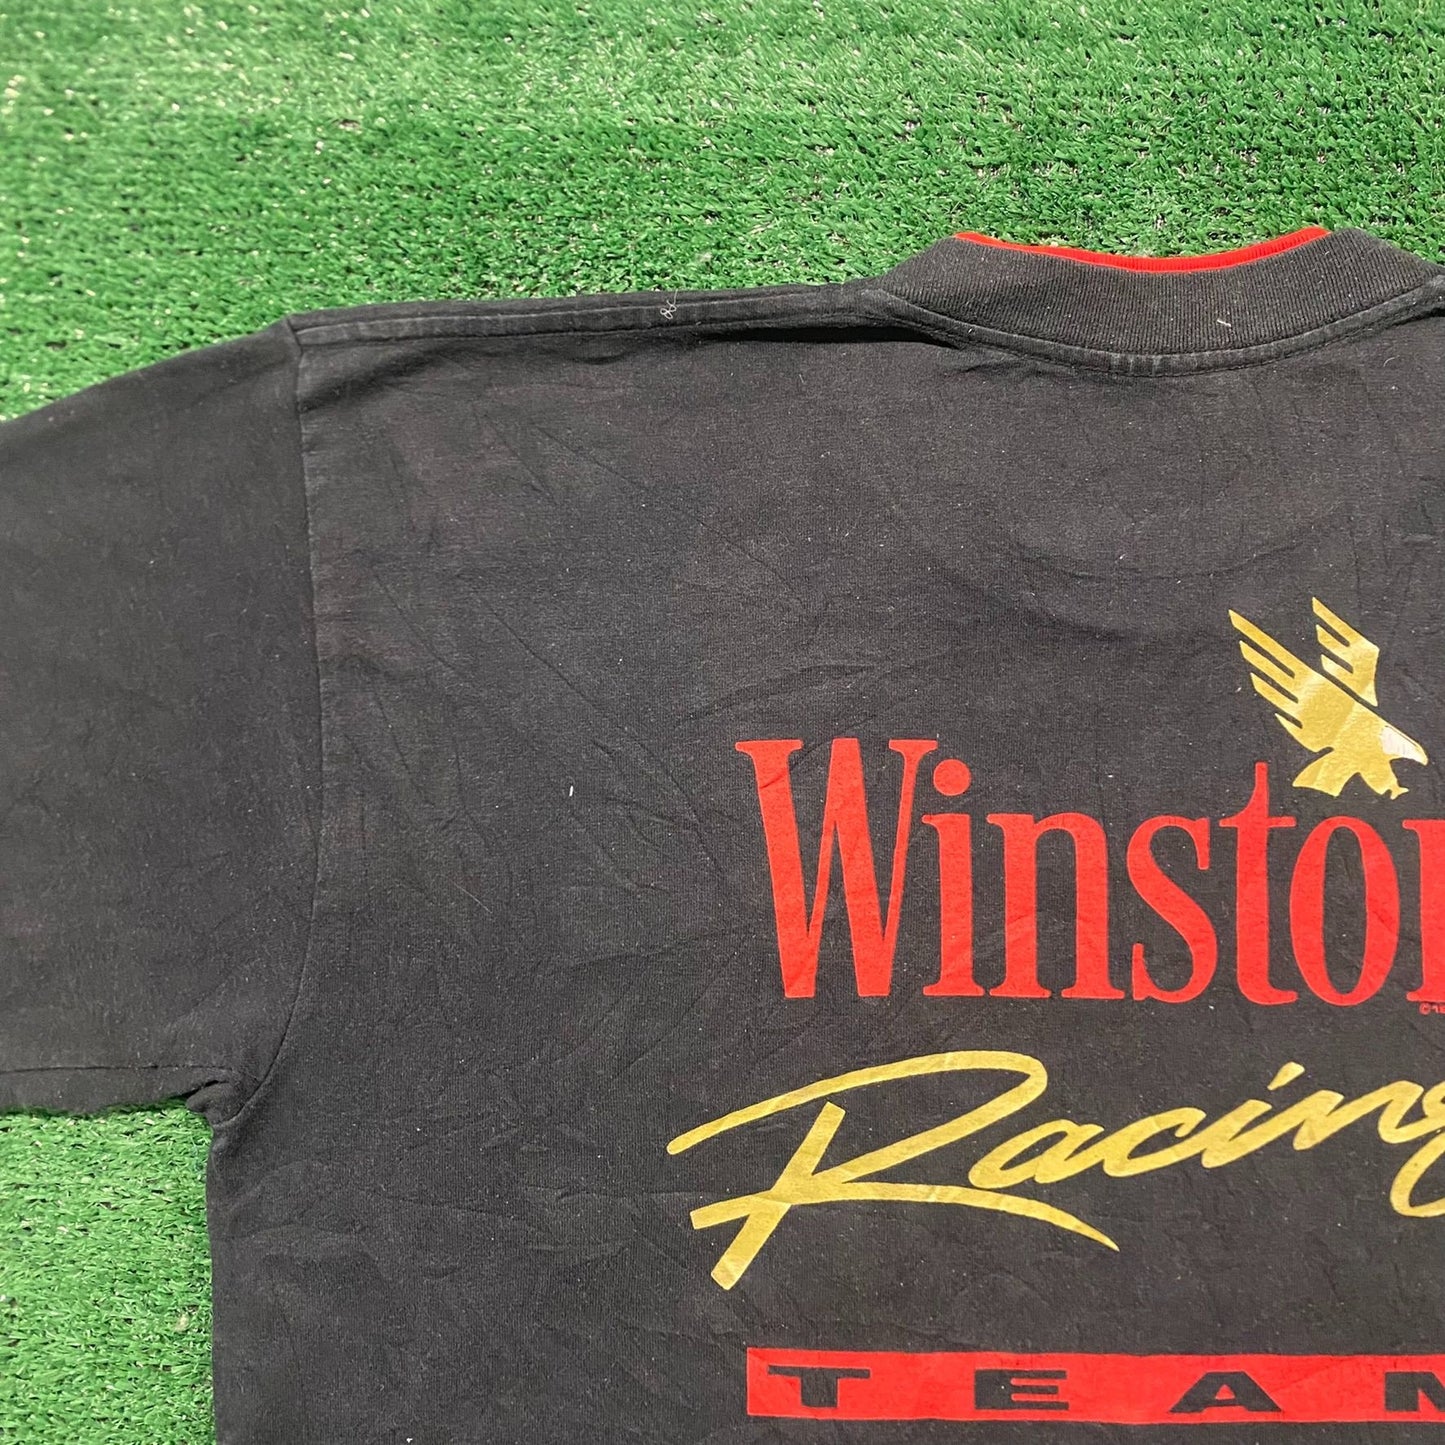 Vintage 90s Winston Racing Team 1993 Baggy Single Stitch Tee